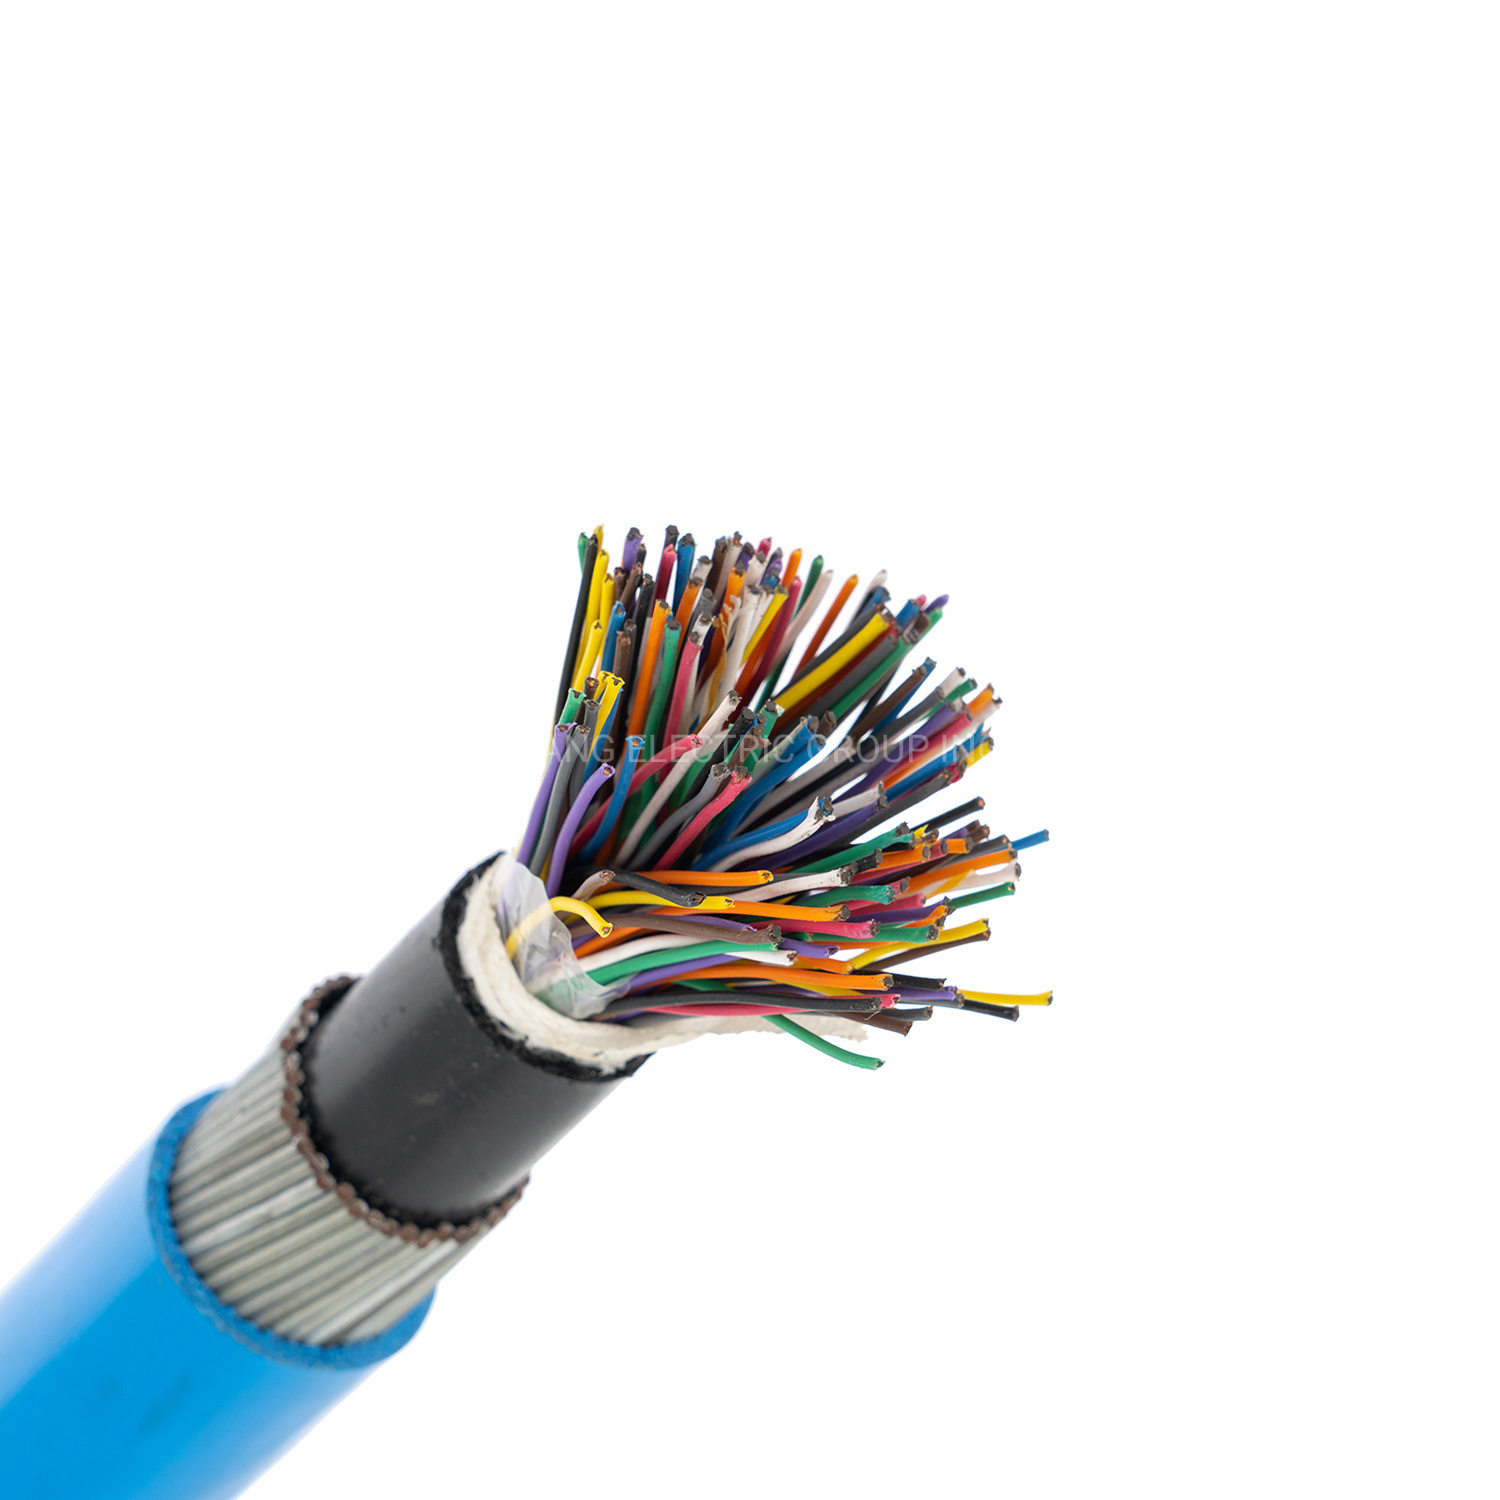 Cu/XLPE/Oscr/PVC/Swa/PVC-Fr Instrumentation Cable 0.5mm 0.75mm 1mm 1.5mm